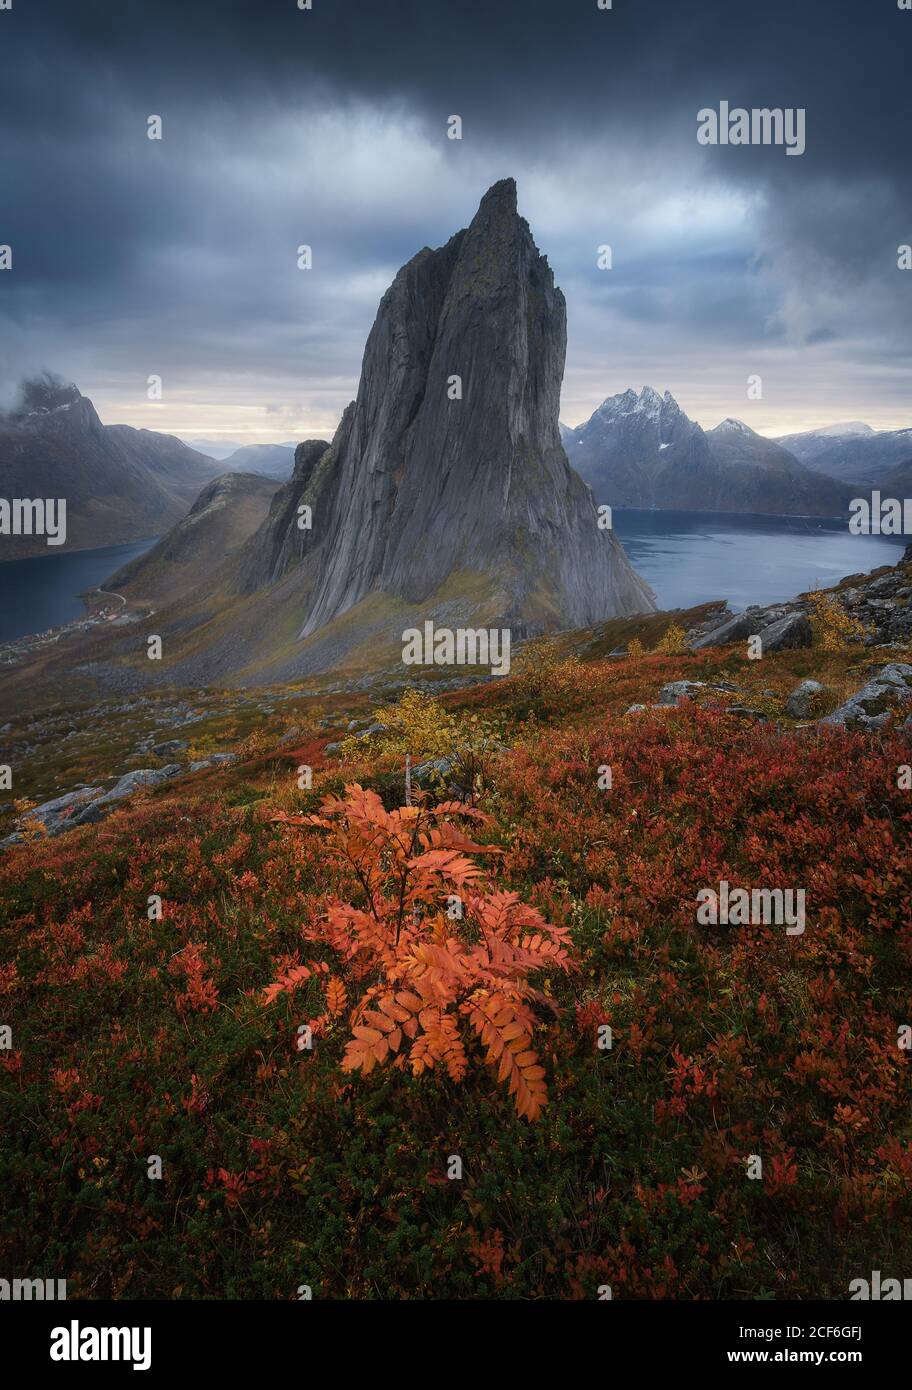 Segla mountain located in grassy valley near calm basin against dark overcast sky on island of Senja, Norway Stock Photo